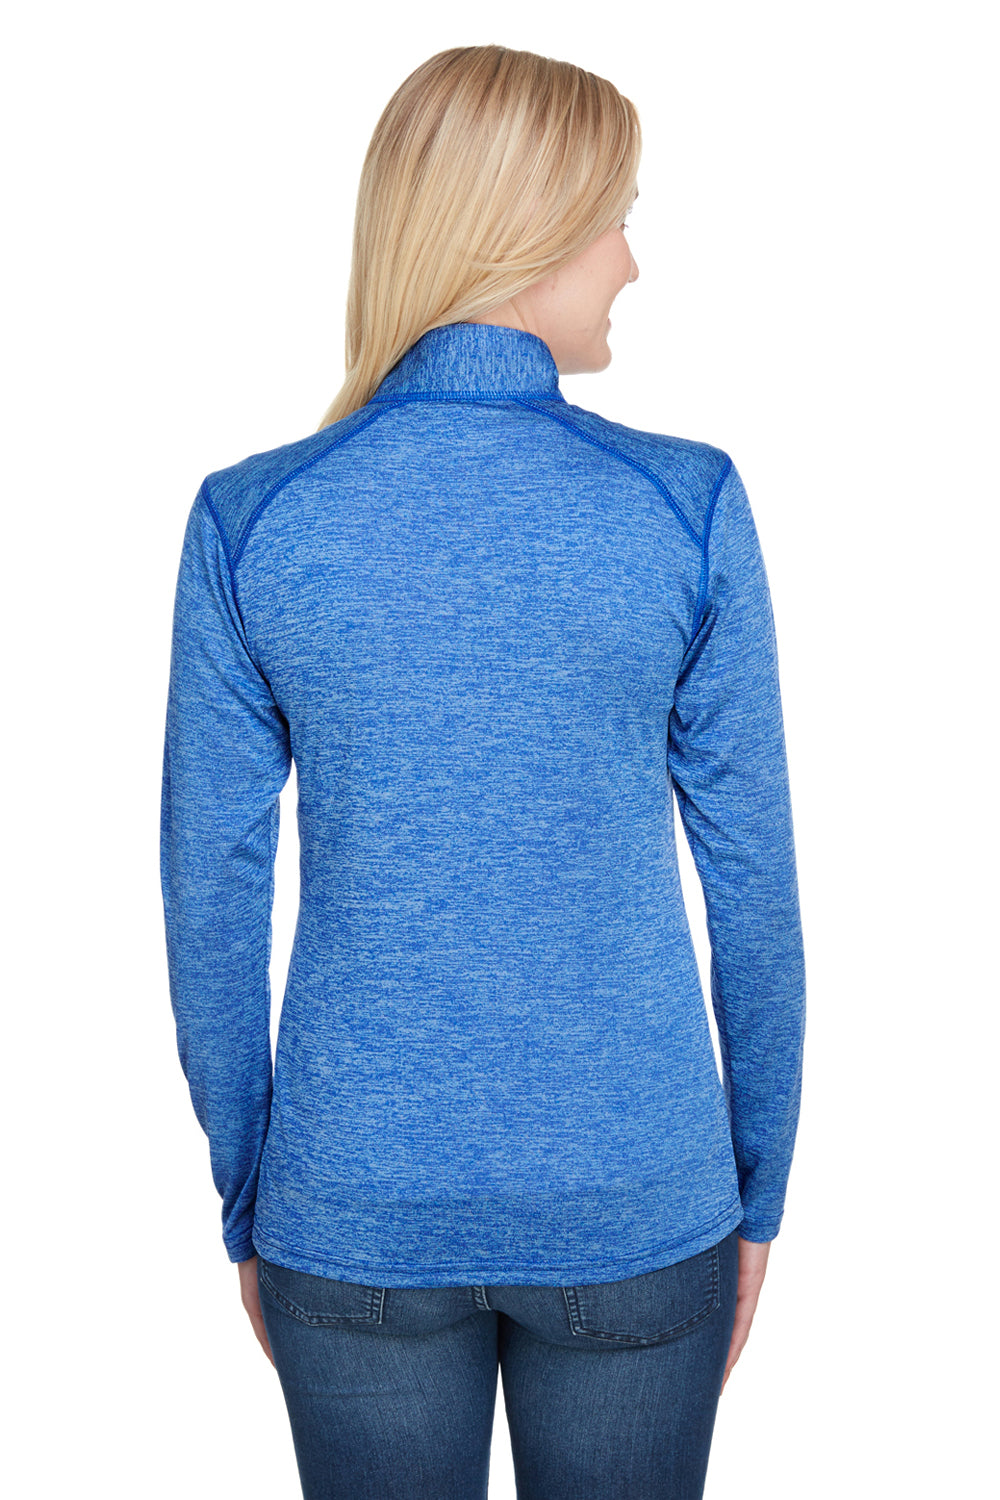 A4 NW4010 Womens Tonal Space Dye Performance Moisture Wicking 1/4 Zip Sweatshirt Light Blue Model Back